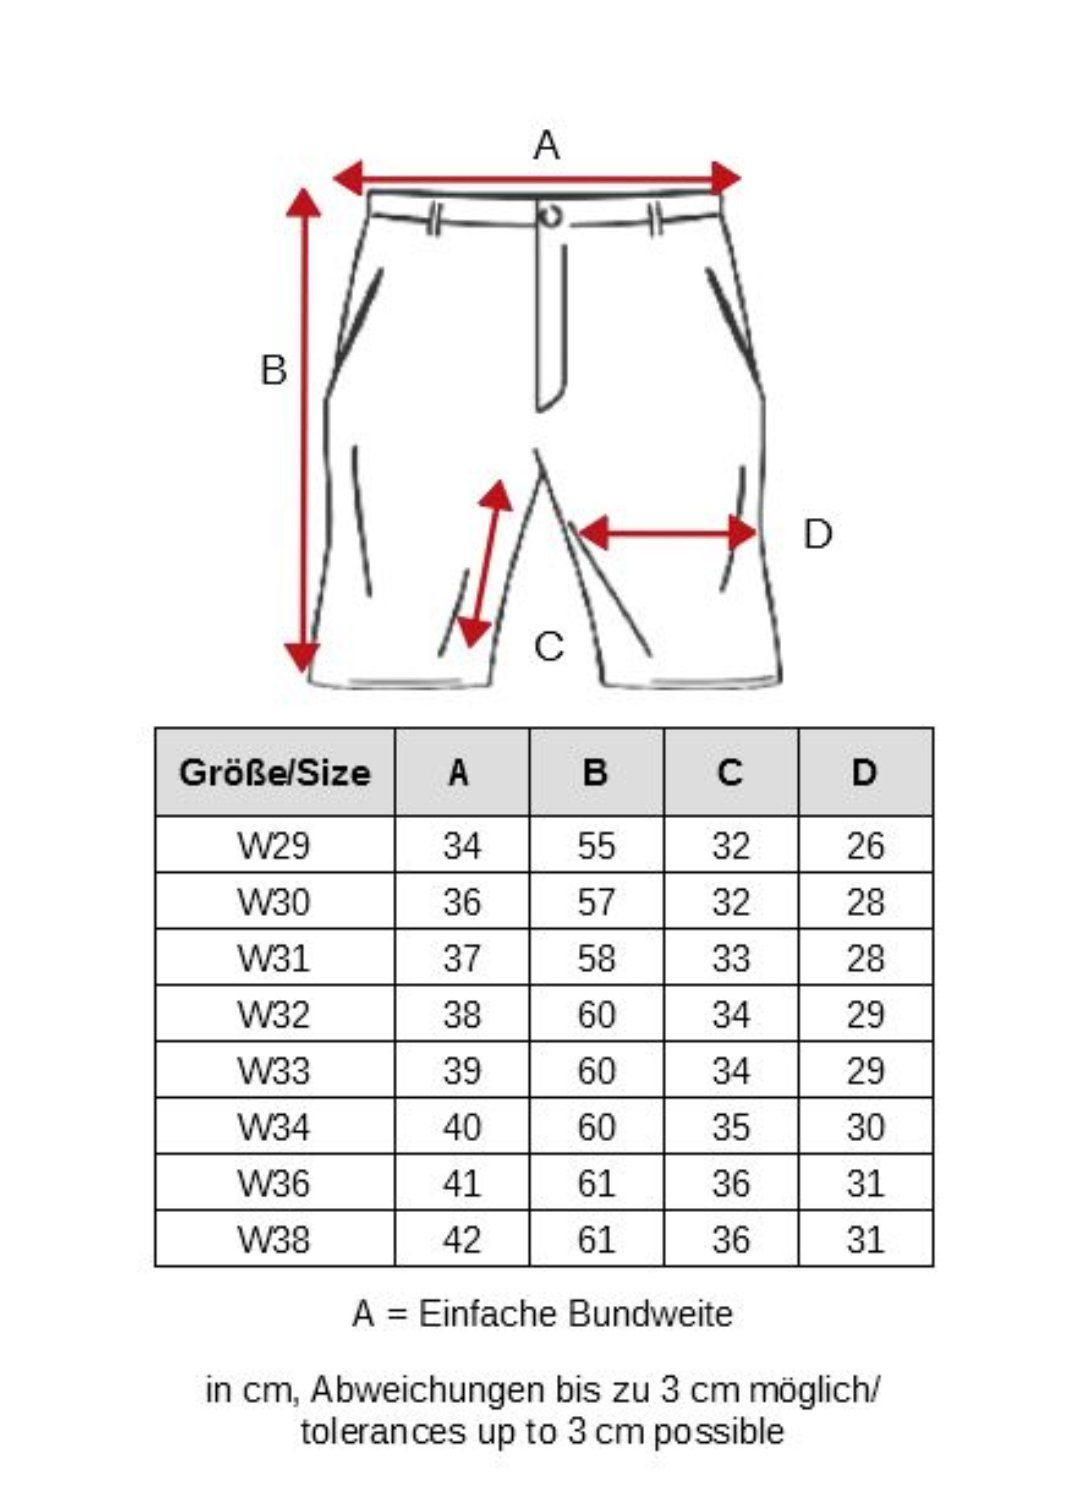 WANGUE Kurze Shorts Cargo Hose Jeansshorts in Bermuda 3238 Jeans Sommer (1-tlg) Blau-2